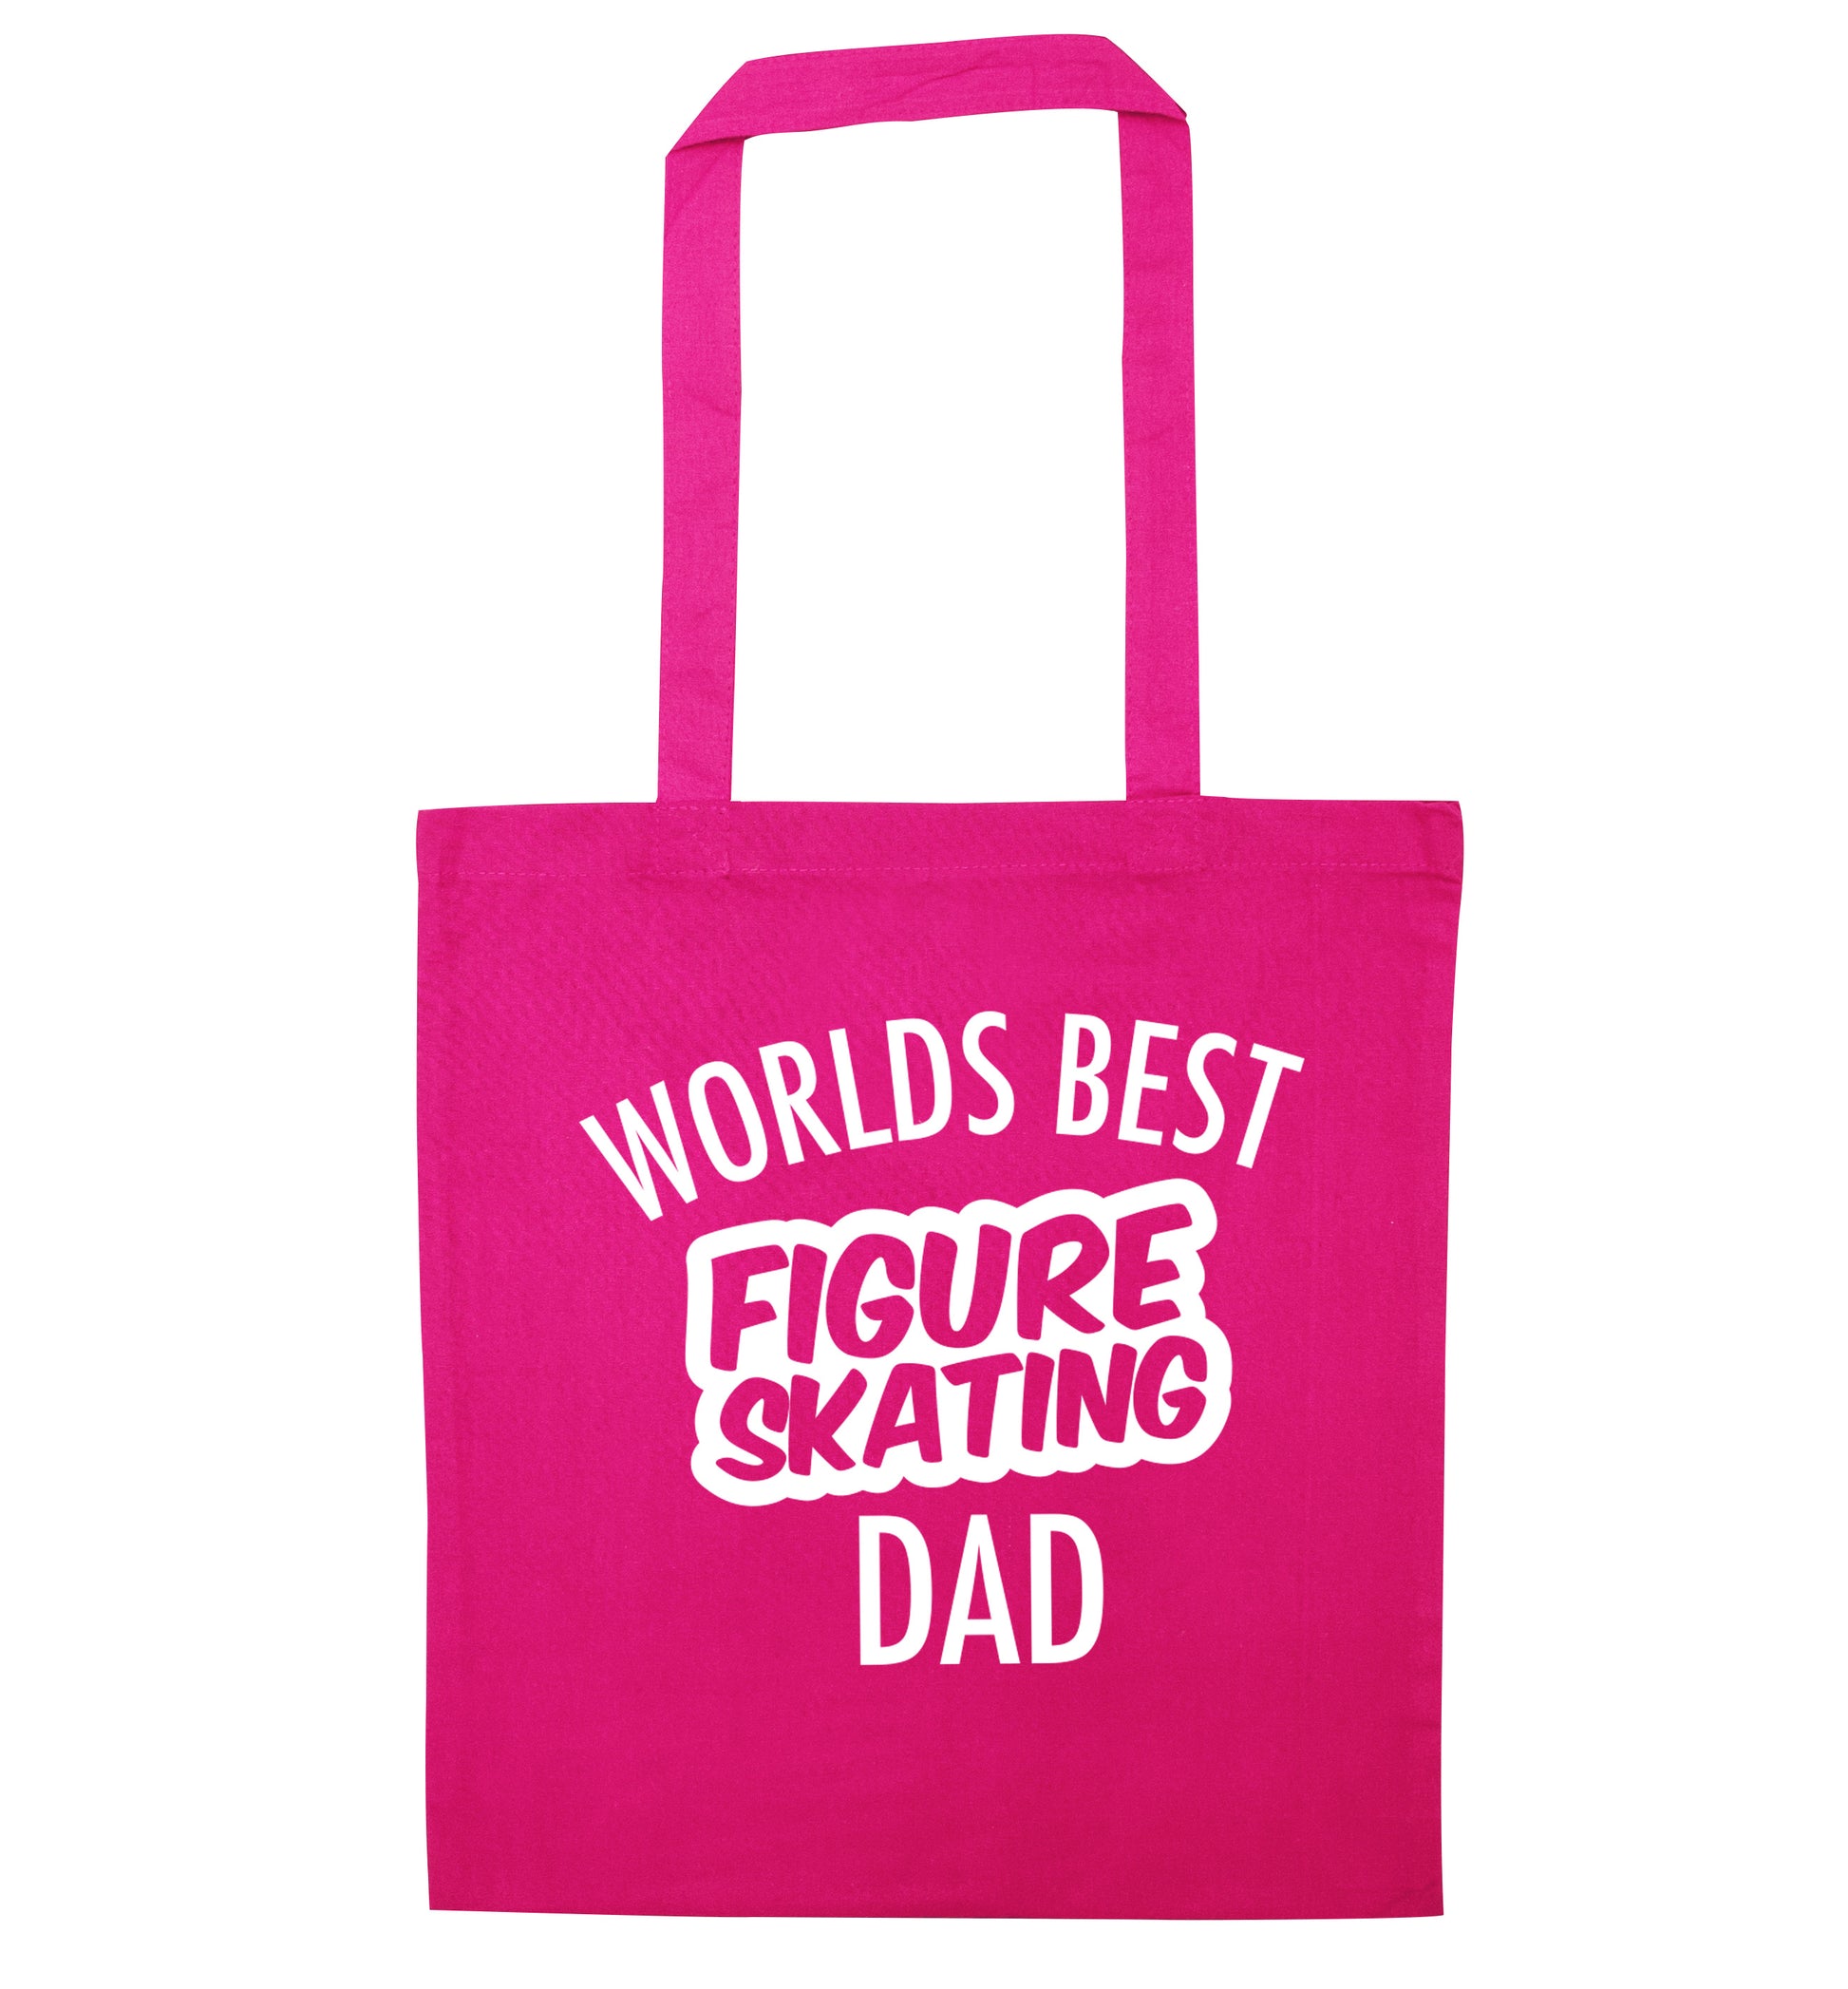 Worlds best figure skating dad pink tote bag